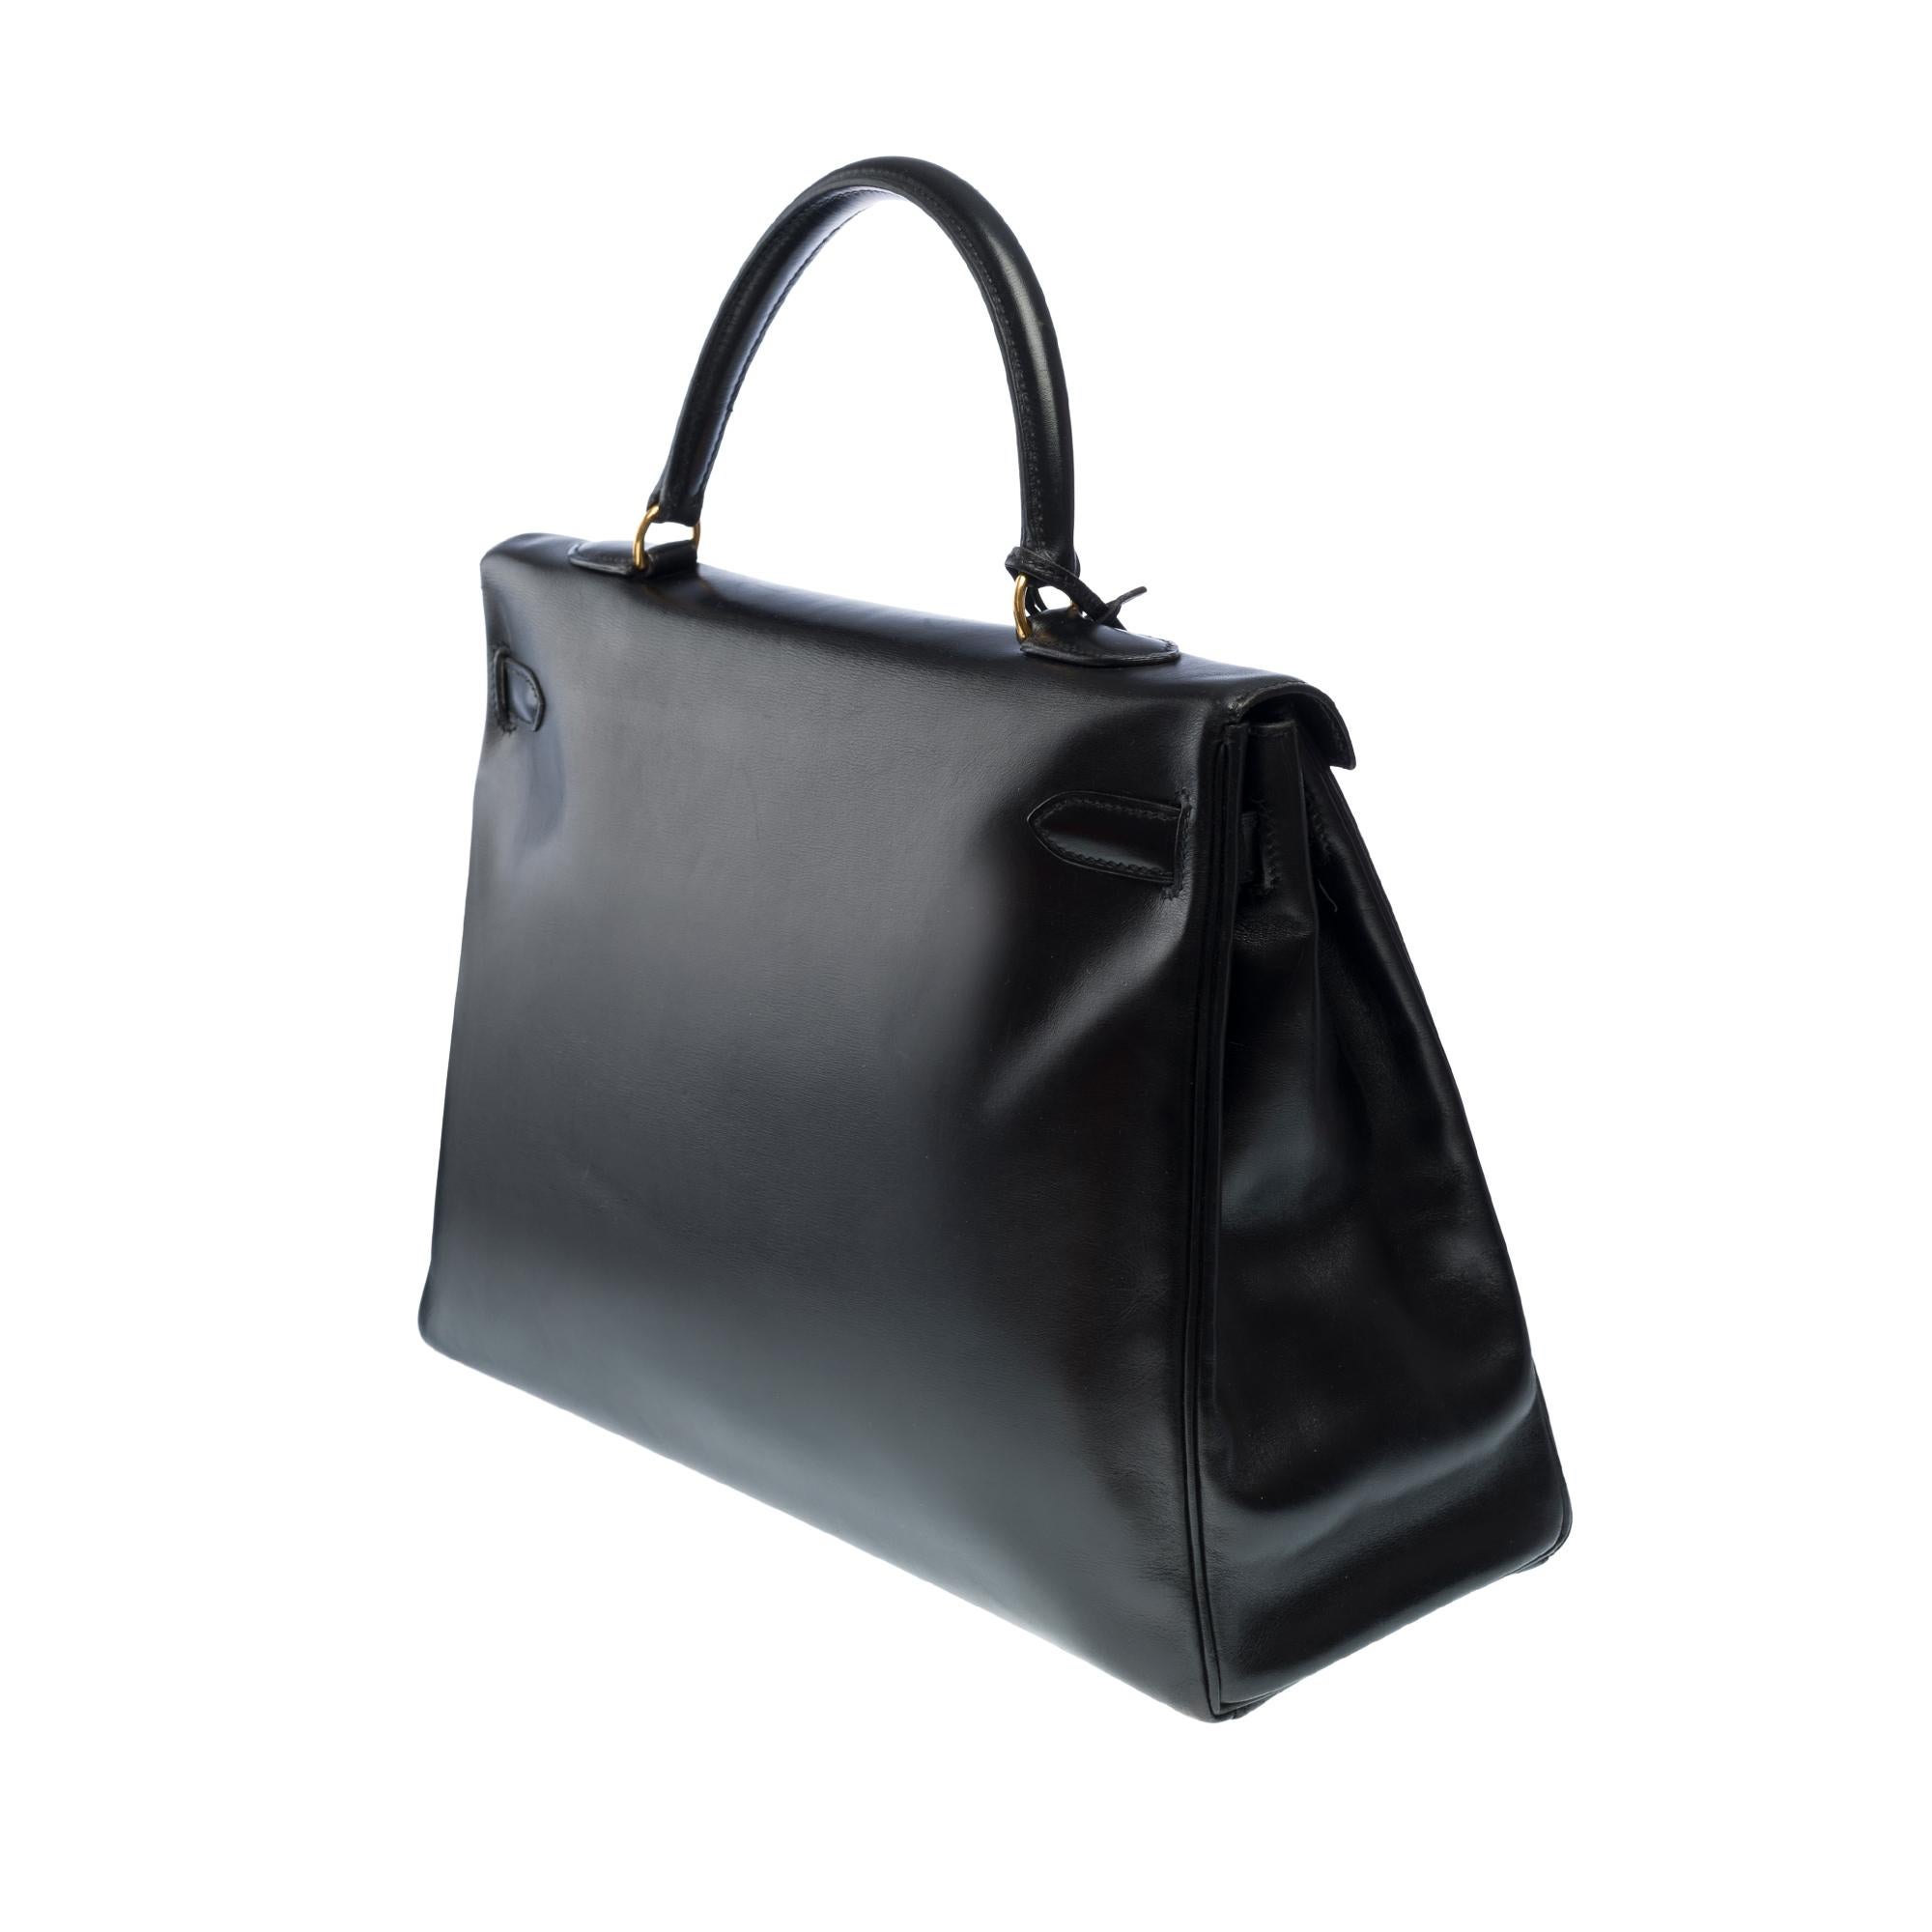 Hermès Kelly 35 retourne handbag strap in black box calfskin leather, GHW 3